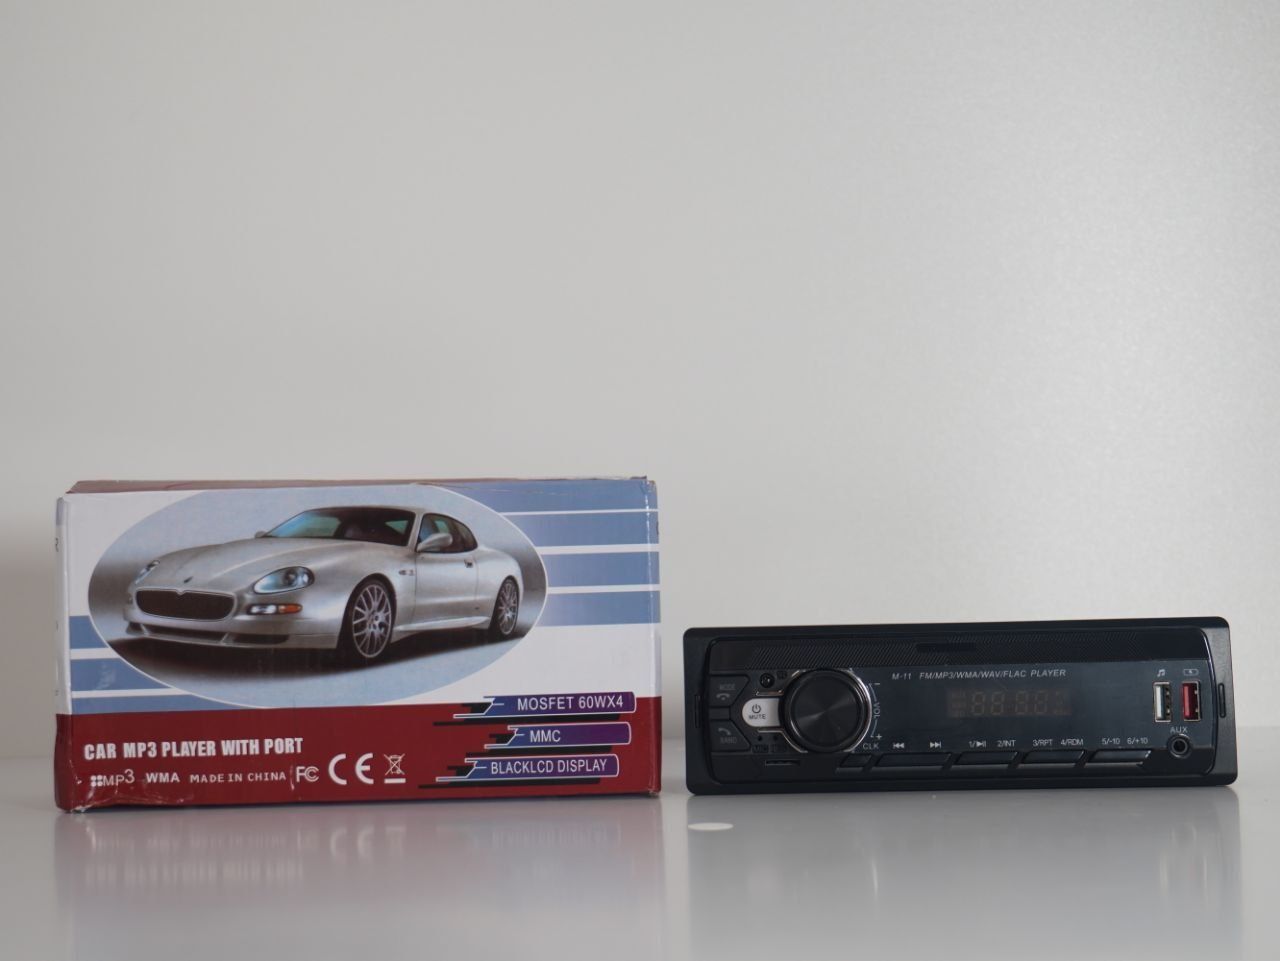 Автомагнітола CAR mp3 PLAYER WITH 12V DC FM 87.5-108 OMHz ( 1 din - 2х